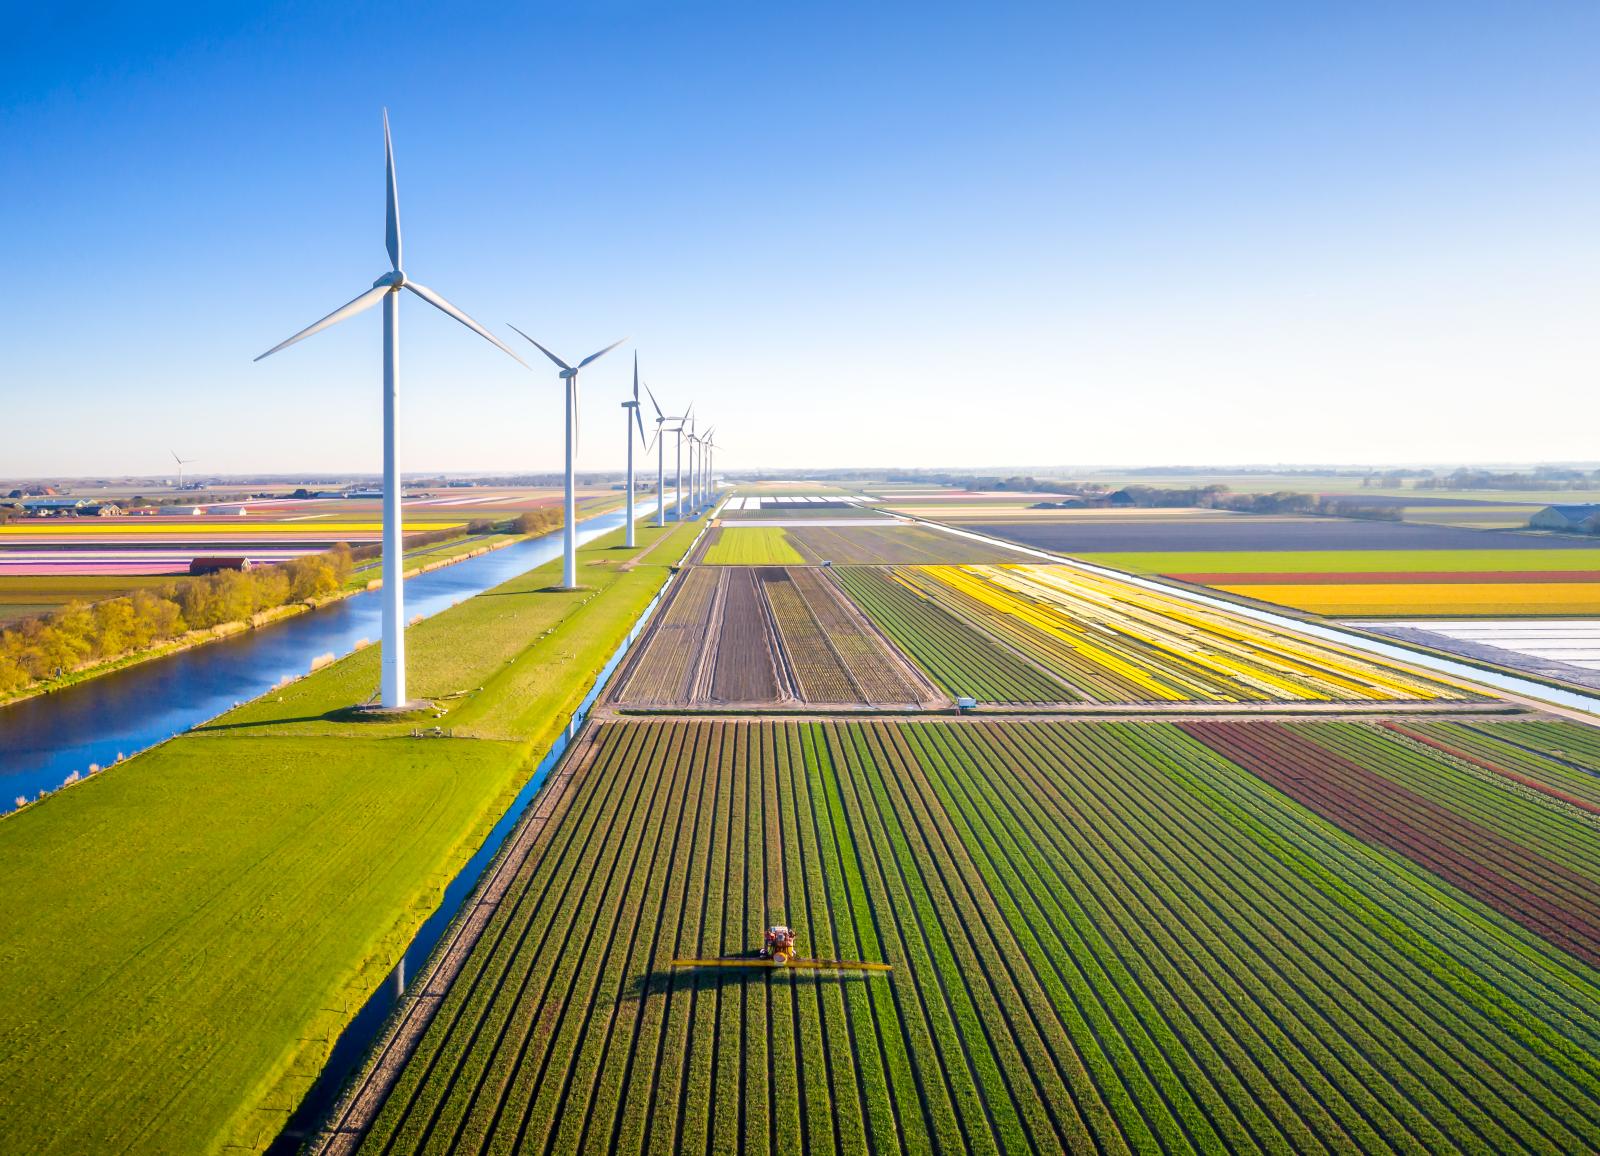 Wind farm on an agricultural field